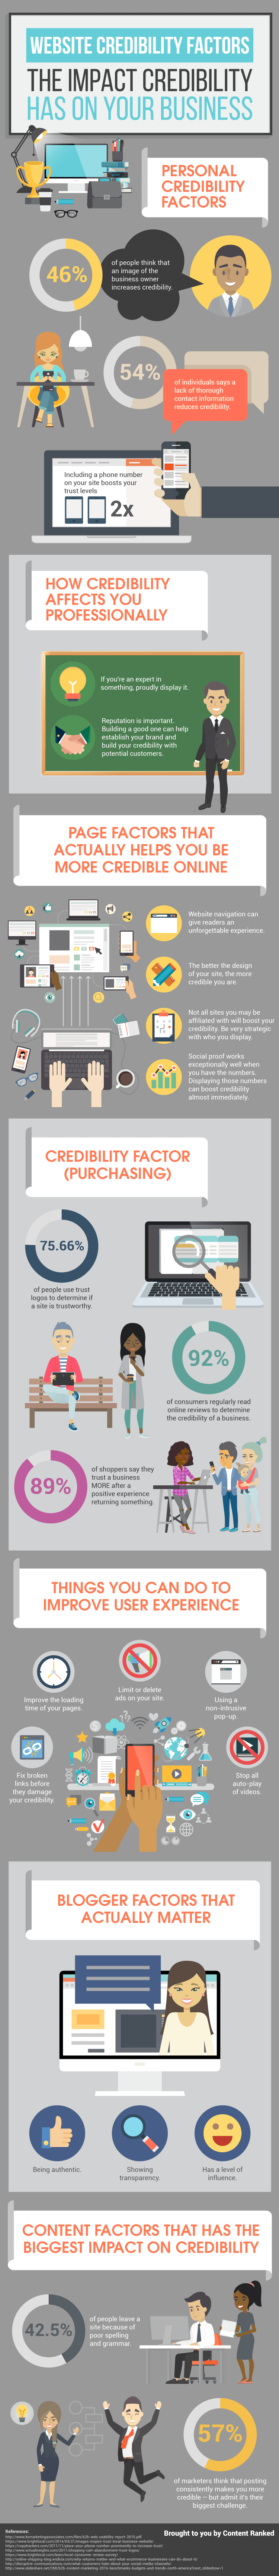 website-credibility-factors